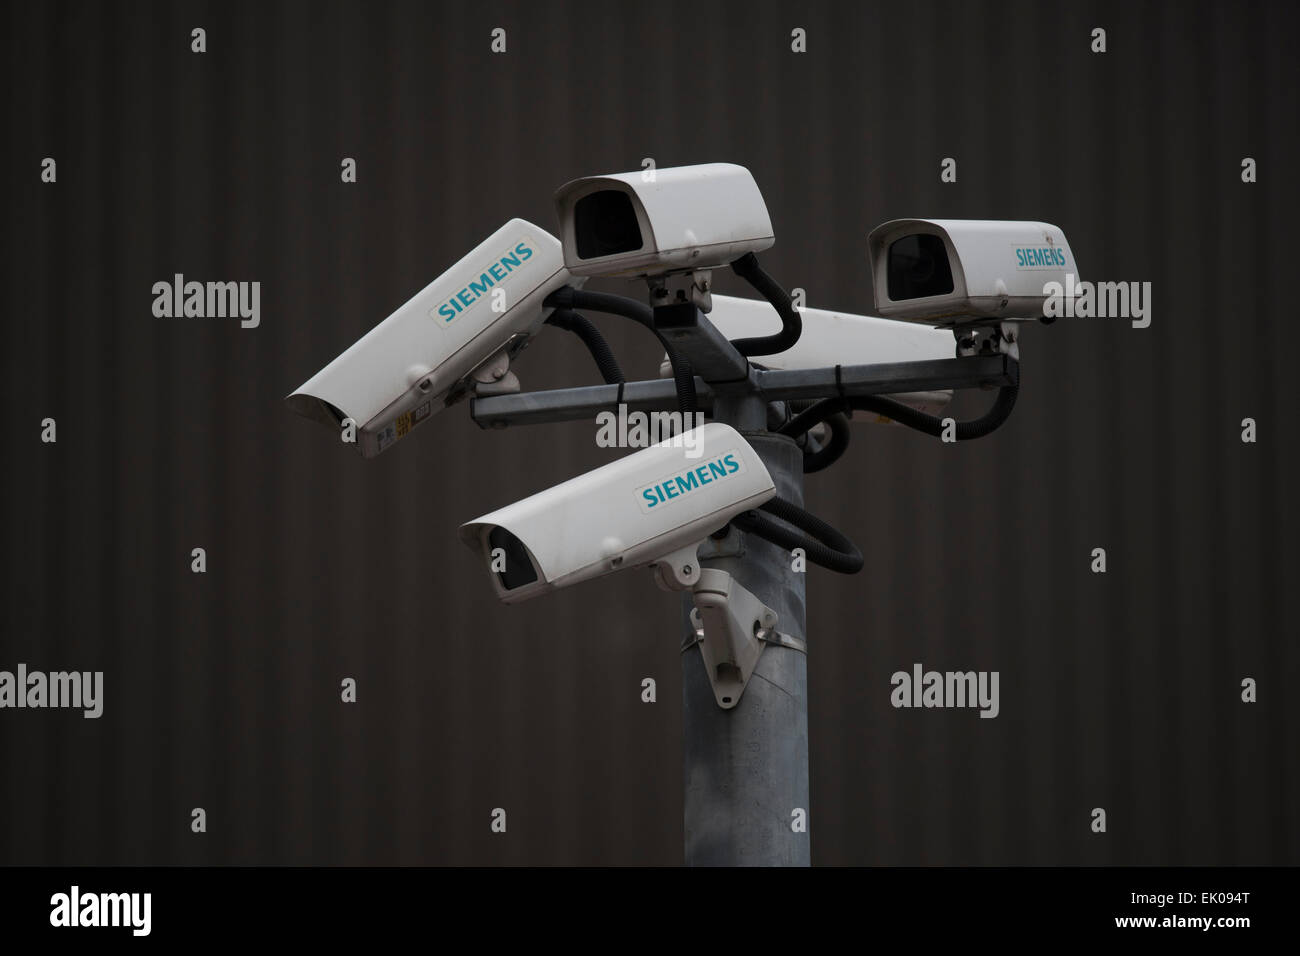 Siemens CCTV security cameras. Stock Photo